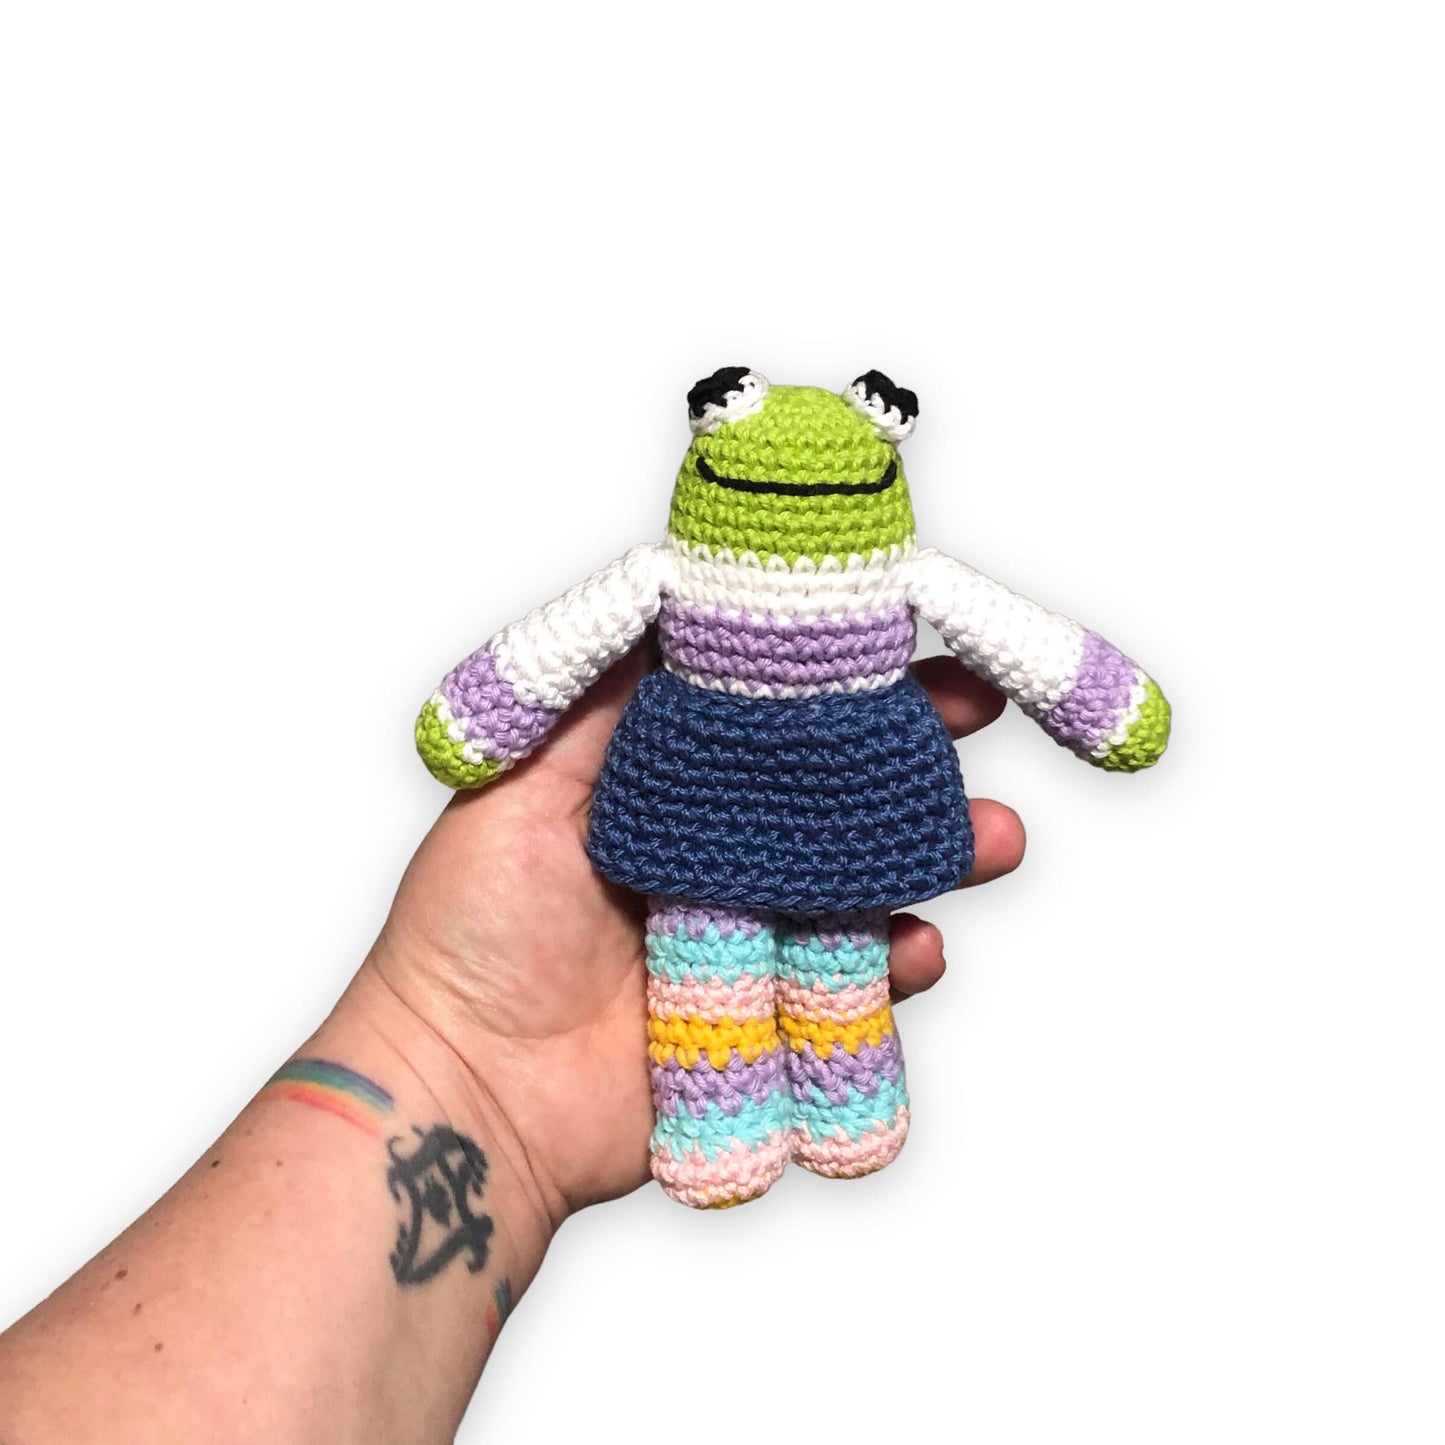 PATTERN: Crochet Love Frogs and Heart